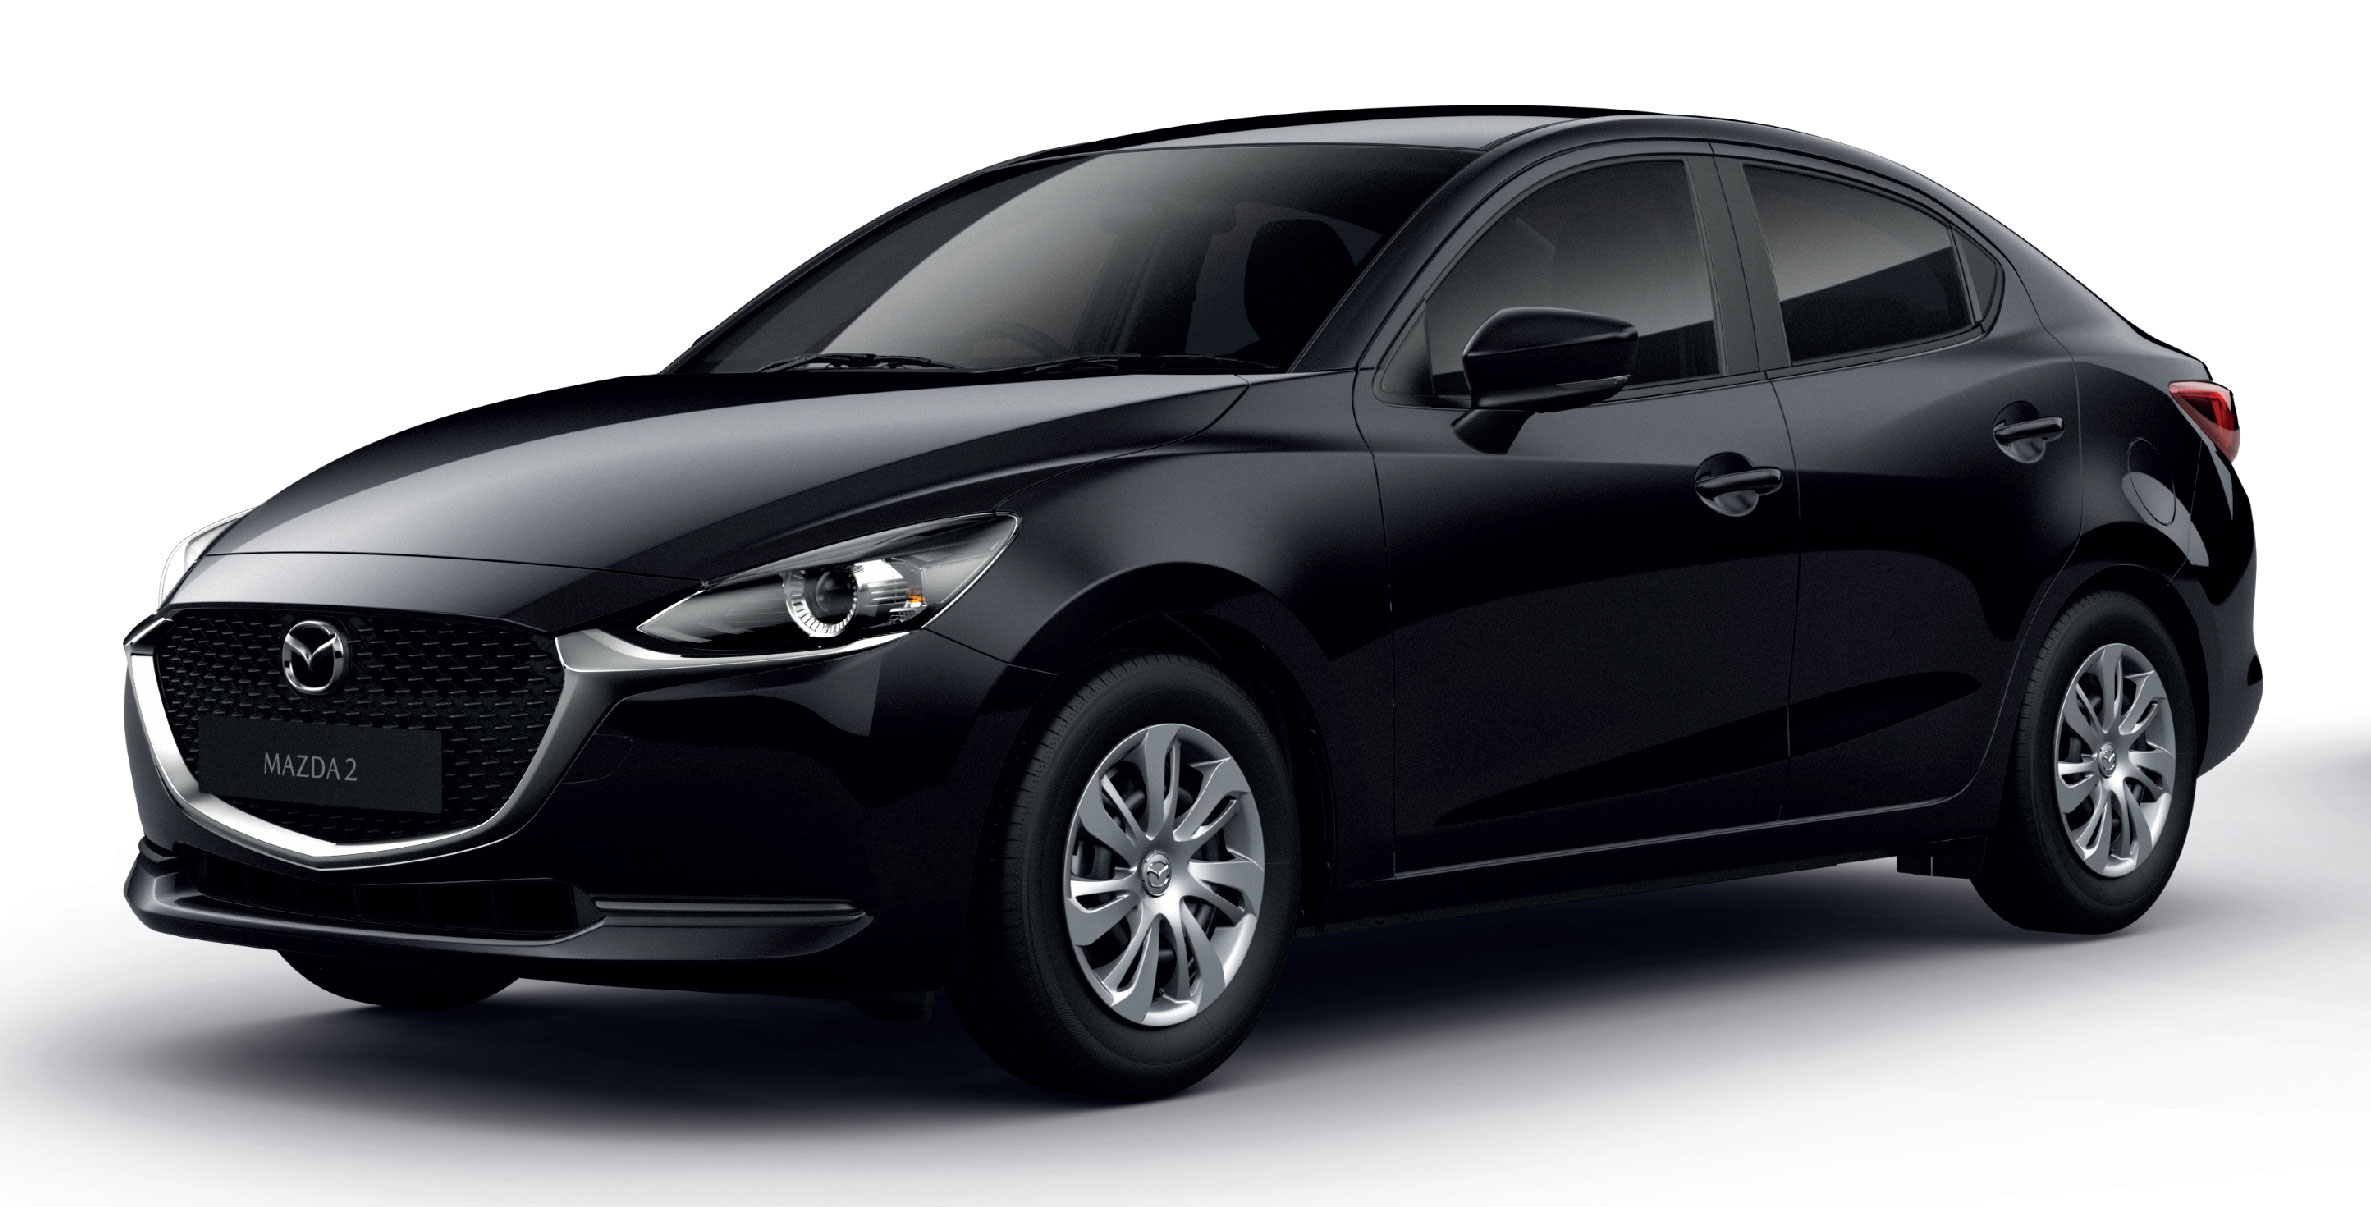 Black mazda. Мазда 2 черная. Mazda 3 2020 черная. Мазда 2 седан 2019. Мазда черная 1700000.